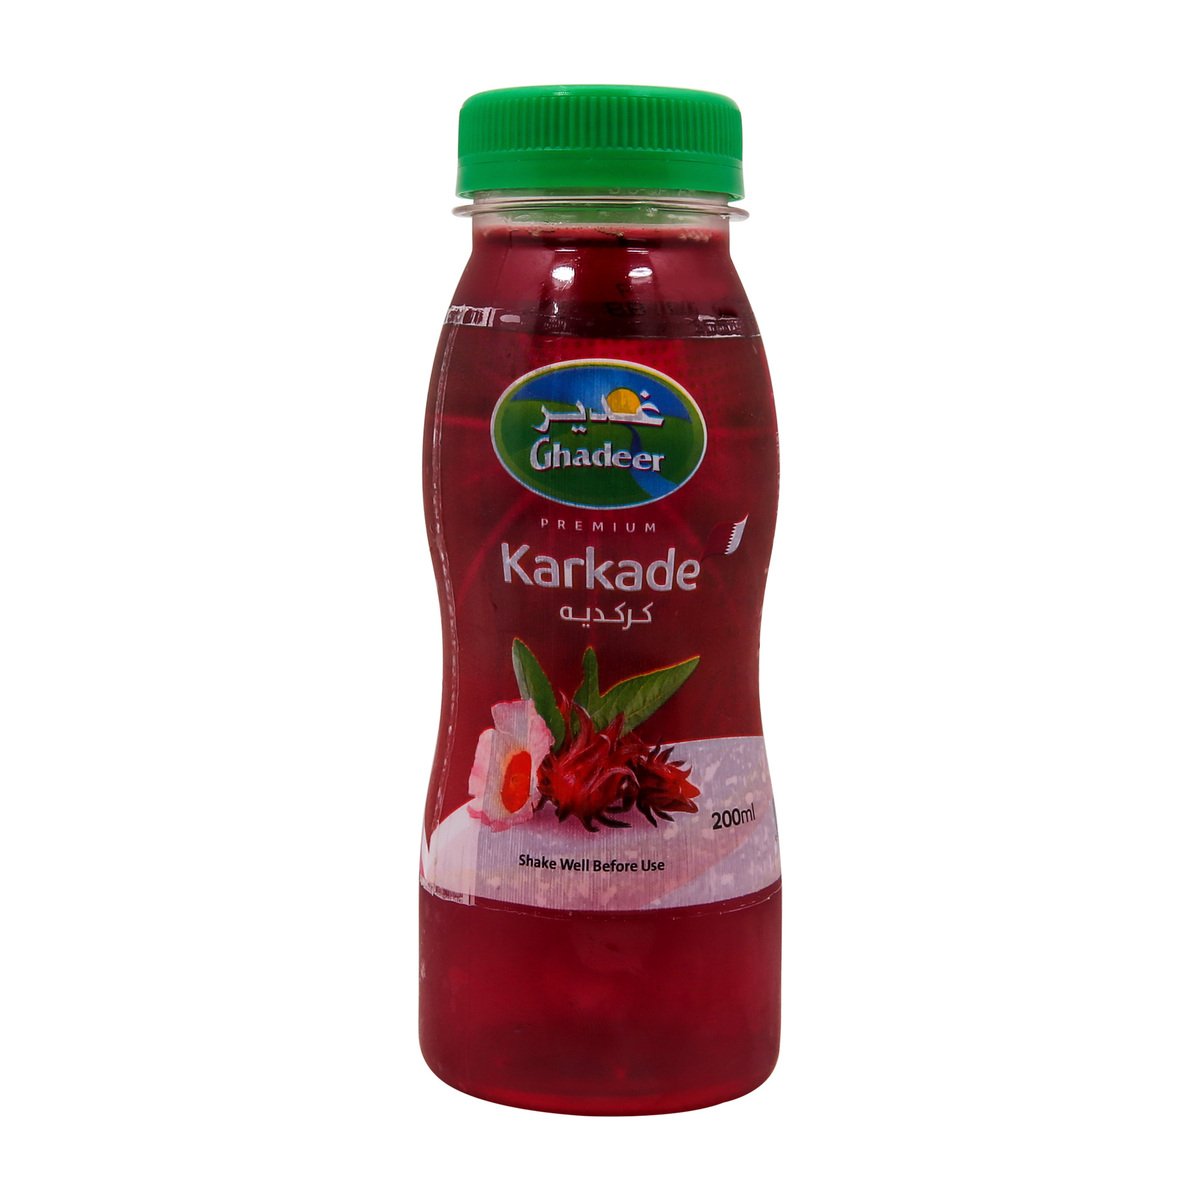 Ghadeer Premium Karkadea Drink 200ml